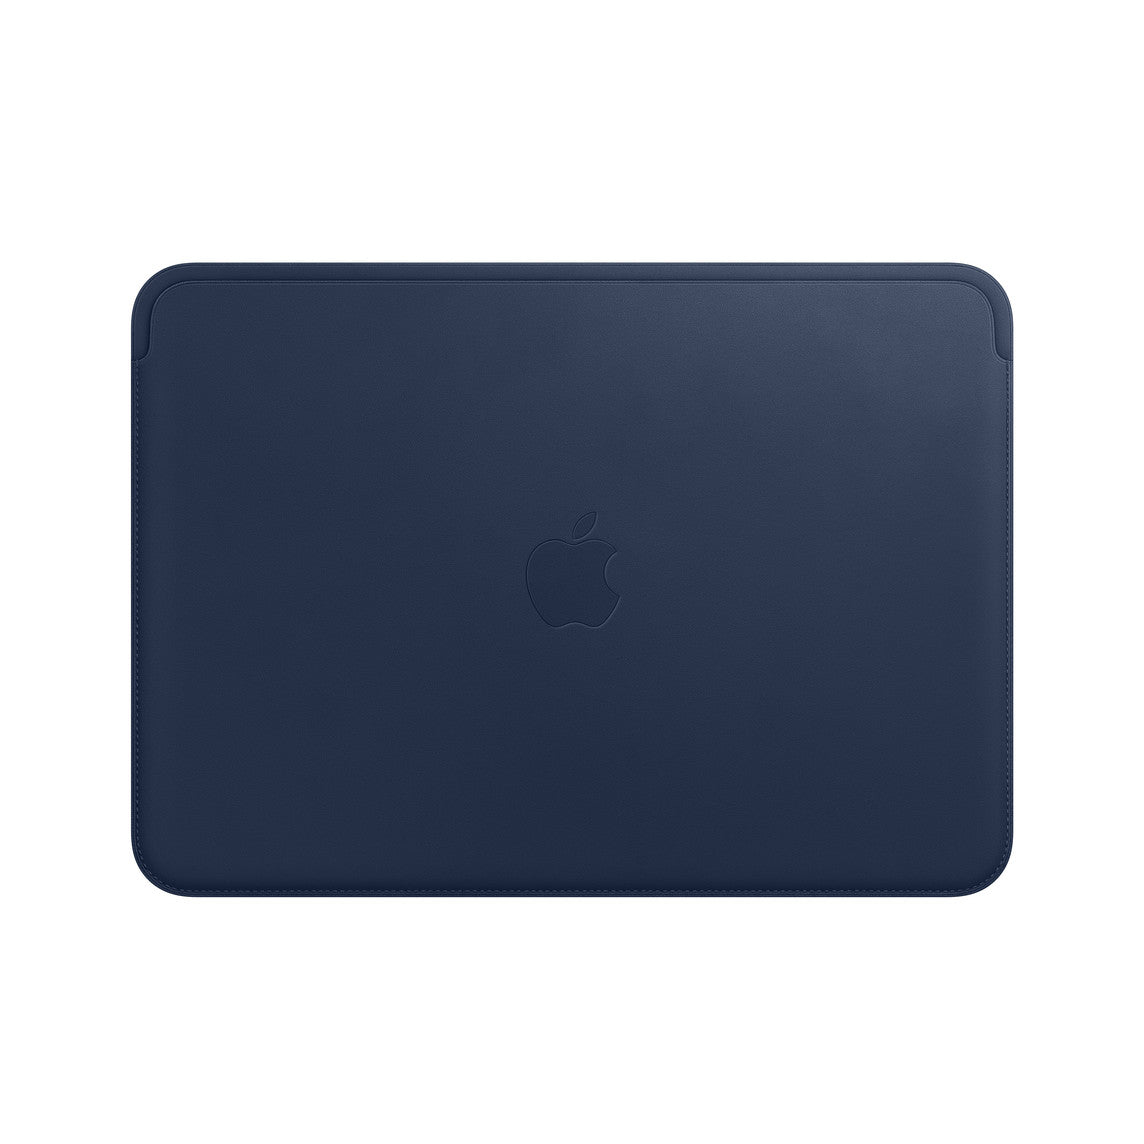 MacBook 13 Leather Sleeve Midnight Blue Midnight Blue New - Sealed